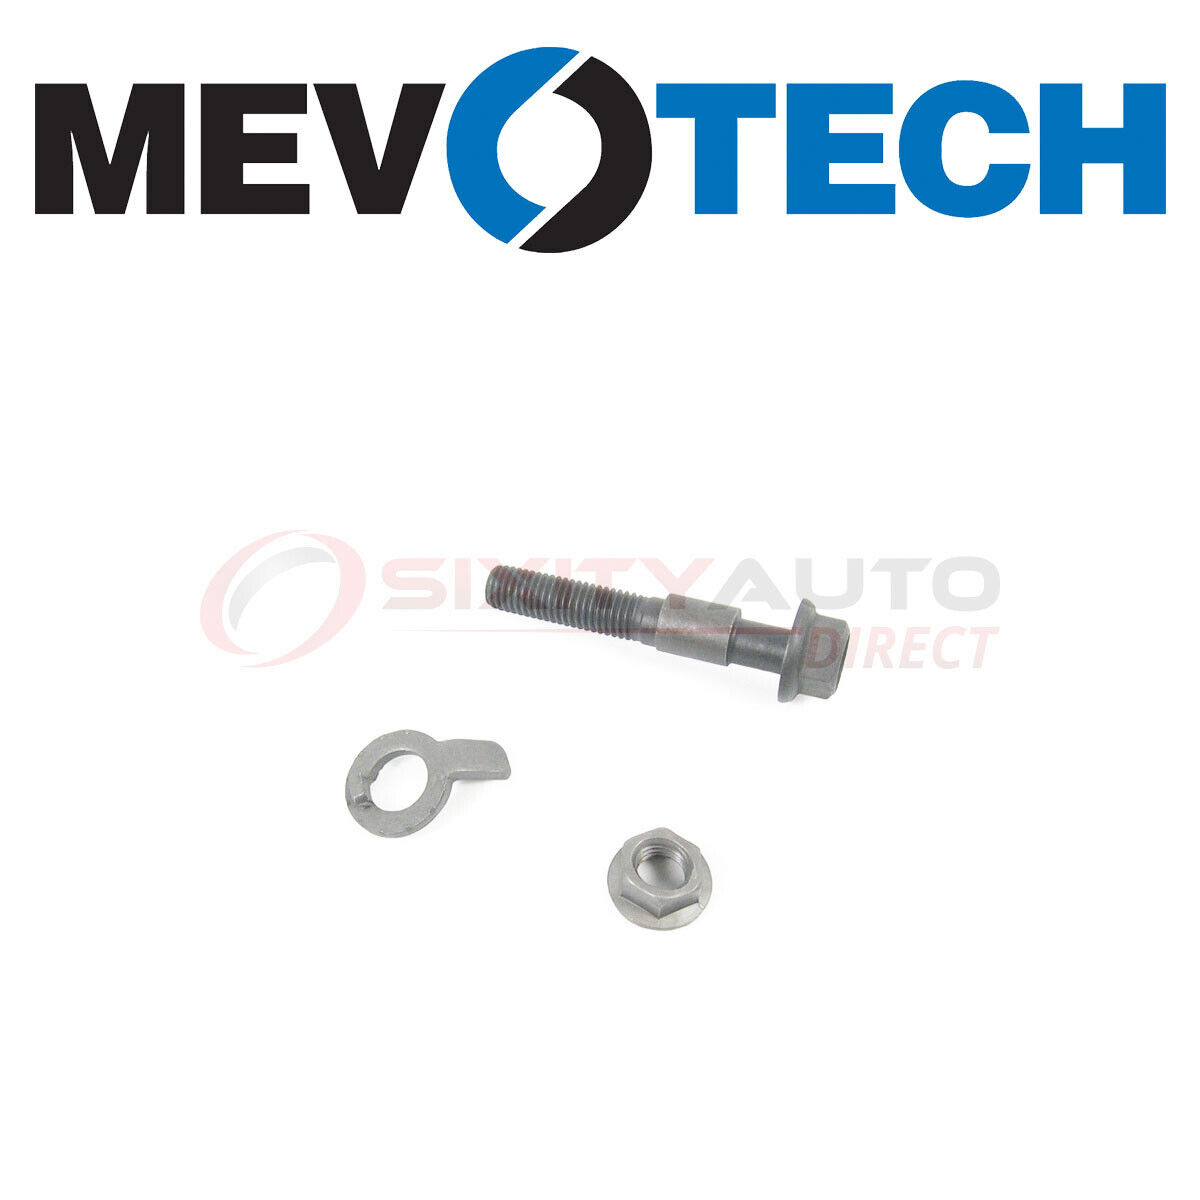 Mevotech Alignment Camber Kit for 2003 Mazda Protege5 2.0L L4 - Wheels Tires fs